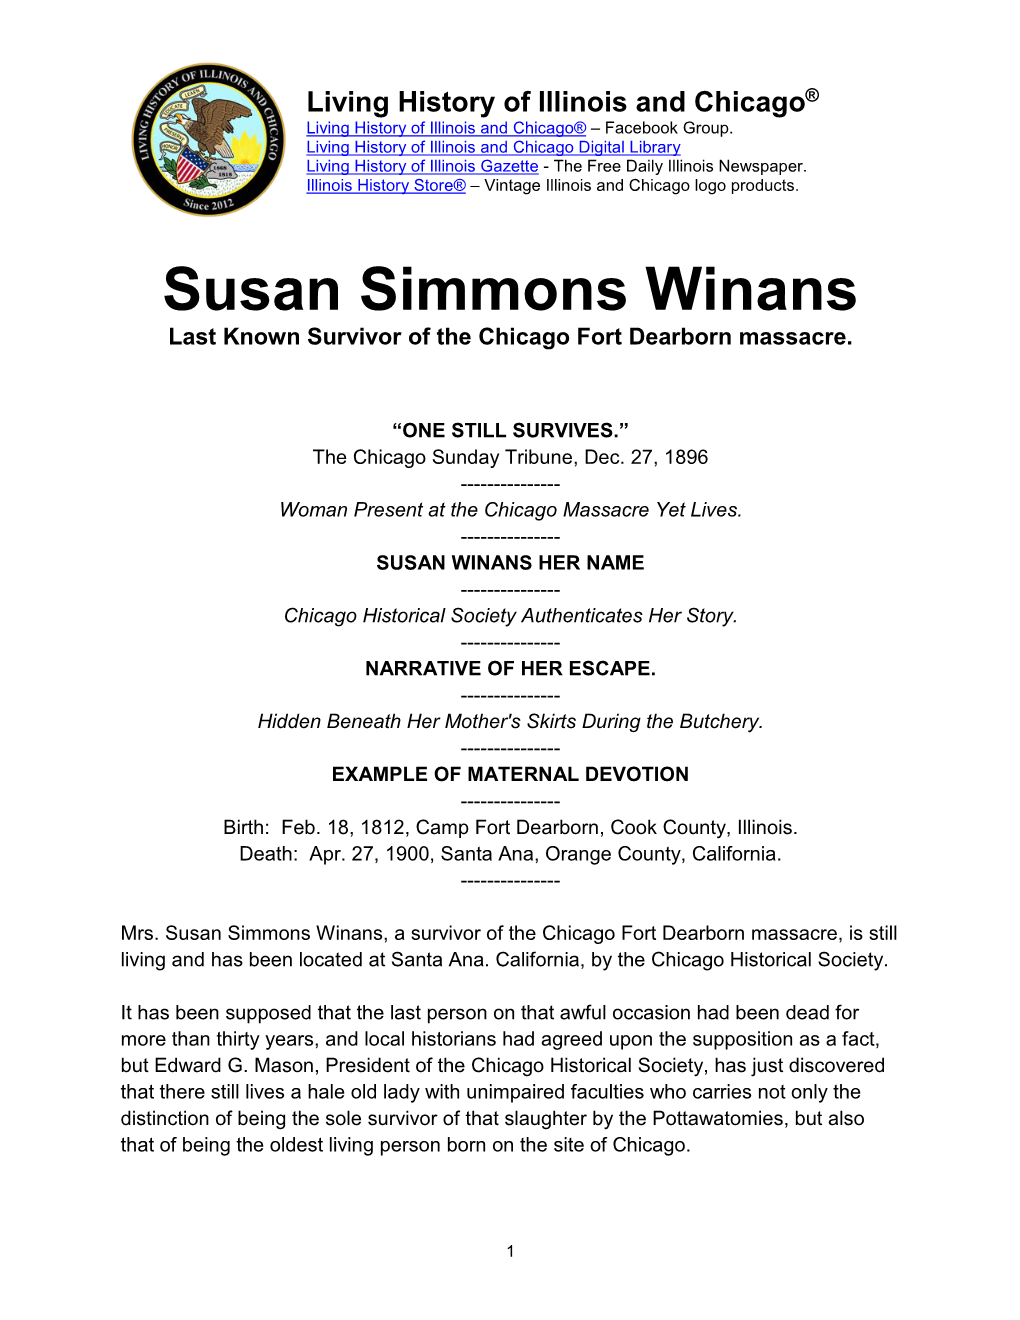 Susan Simmons Winans Last Known Survivor of the Chicago Fort Dearborn Massacre